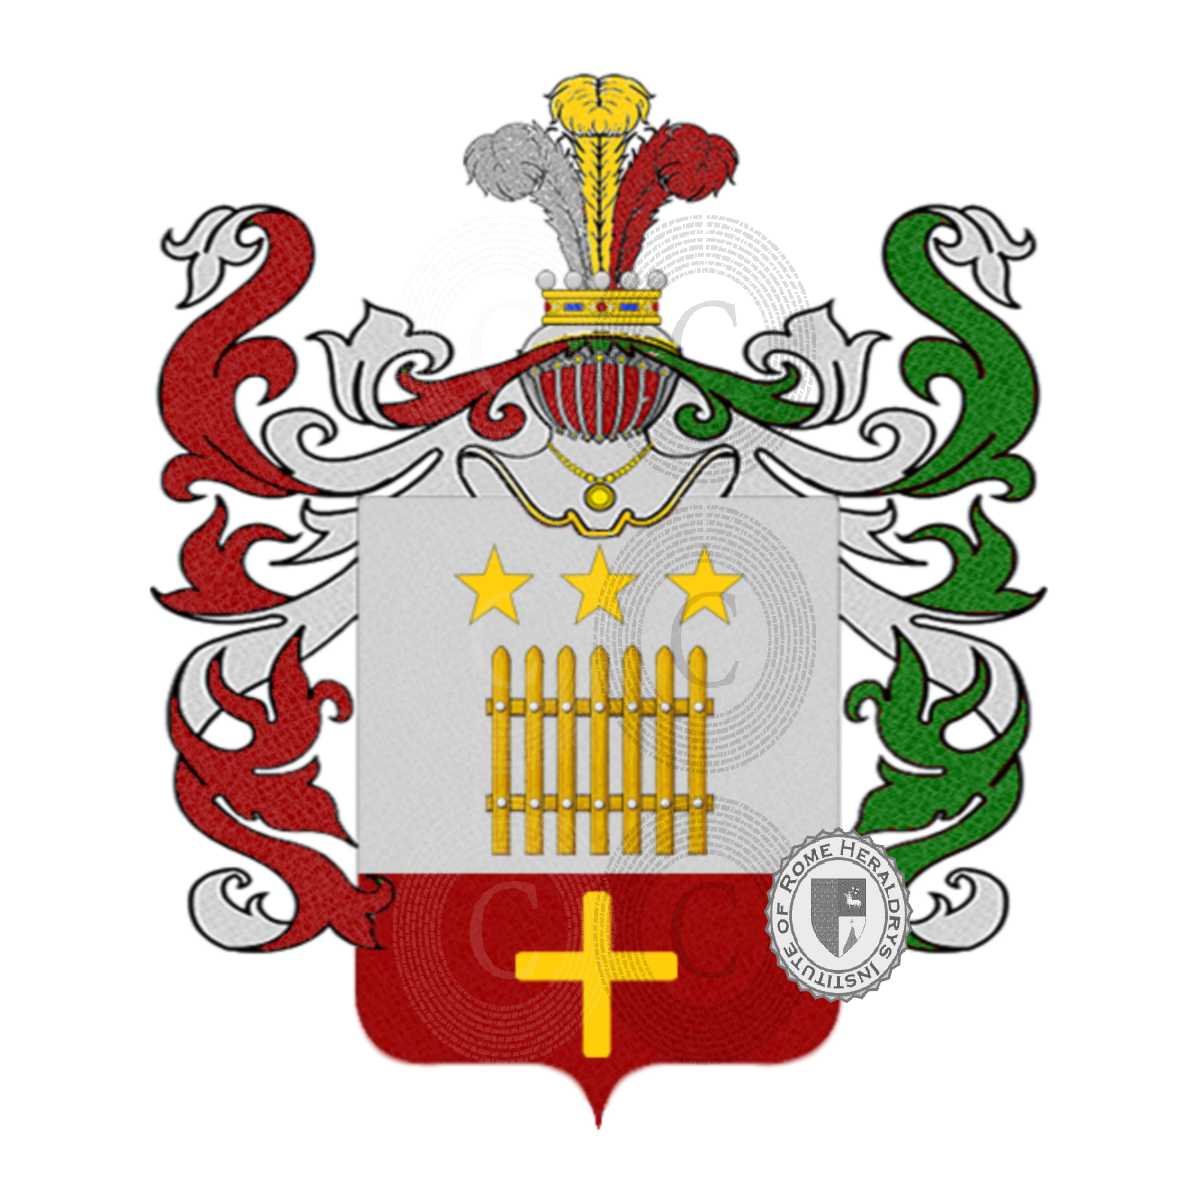 Wappen der FamilieBello